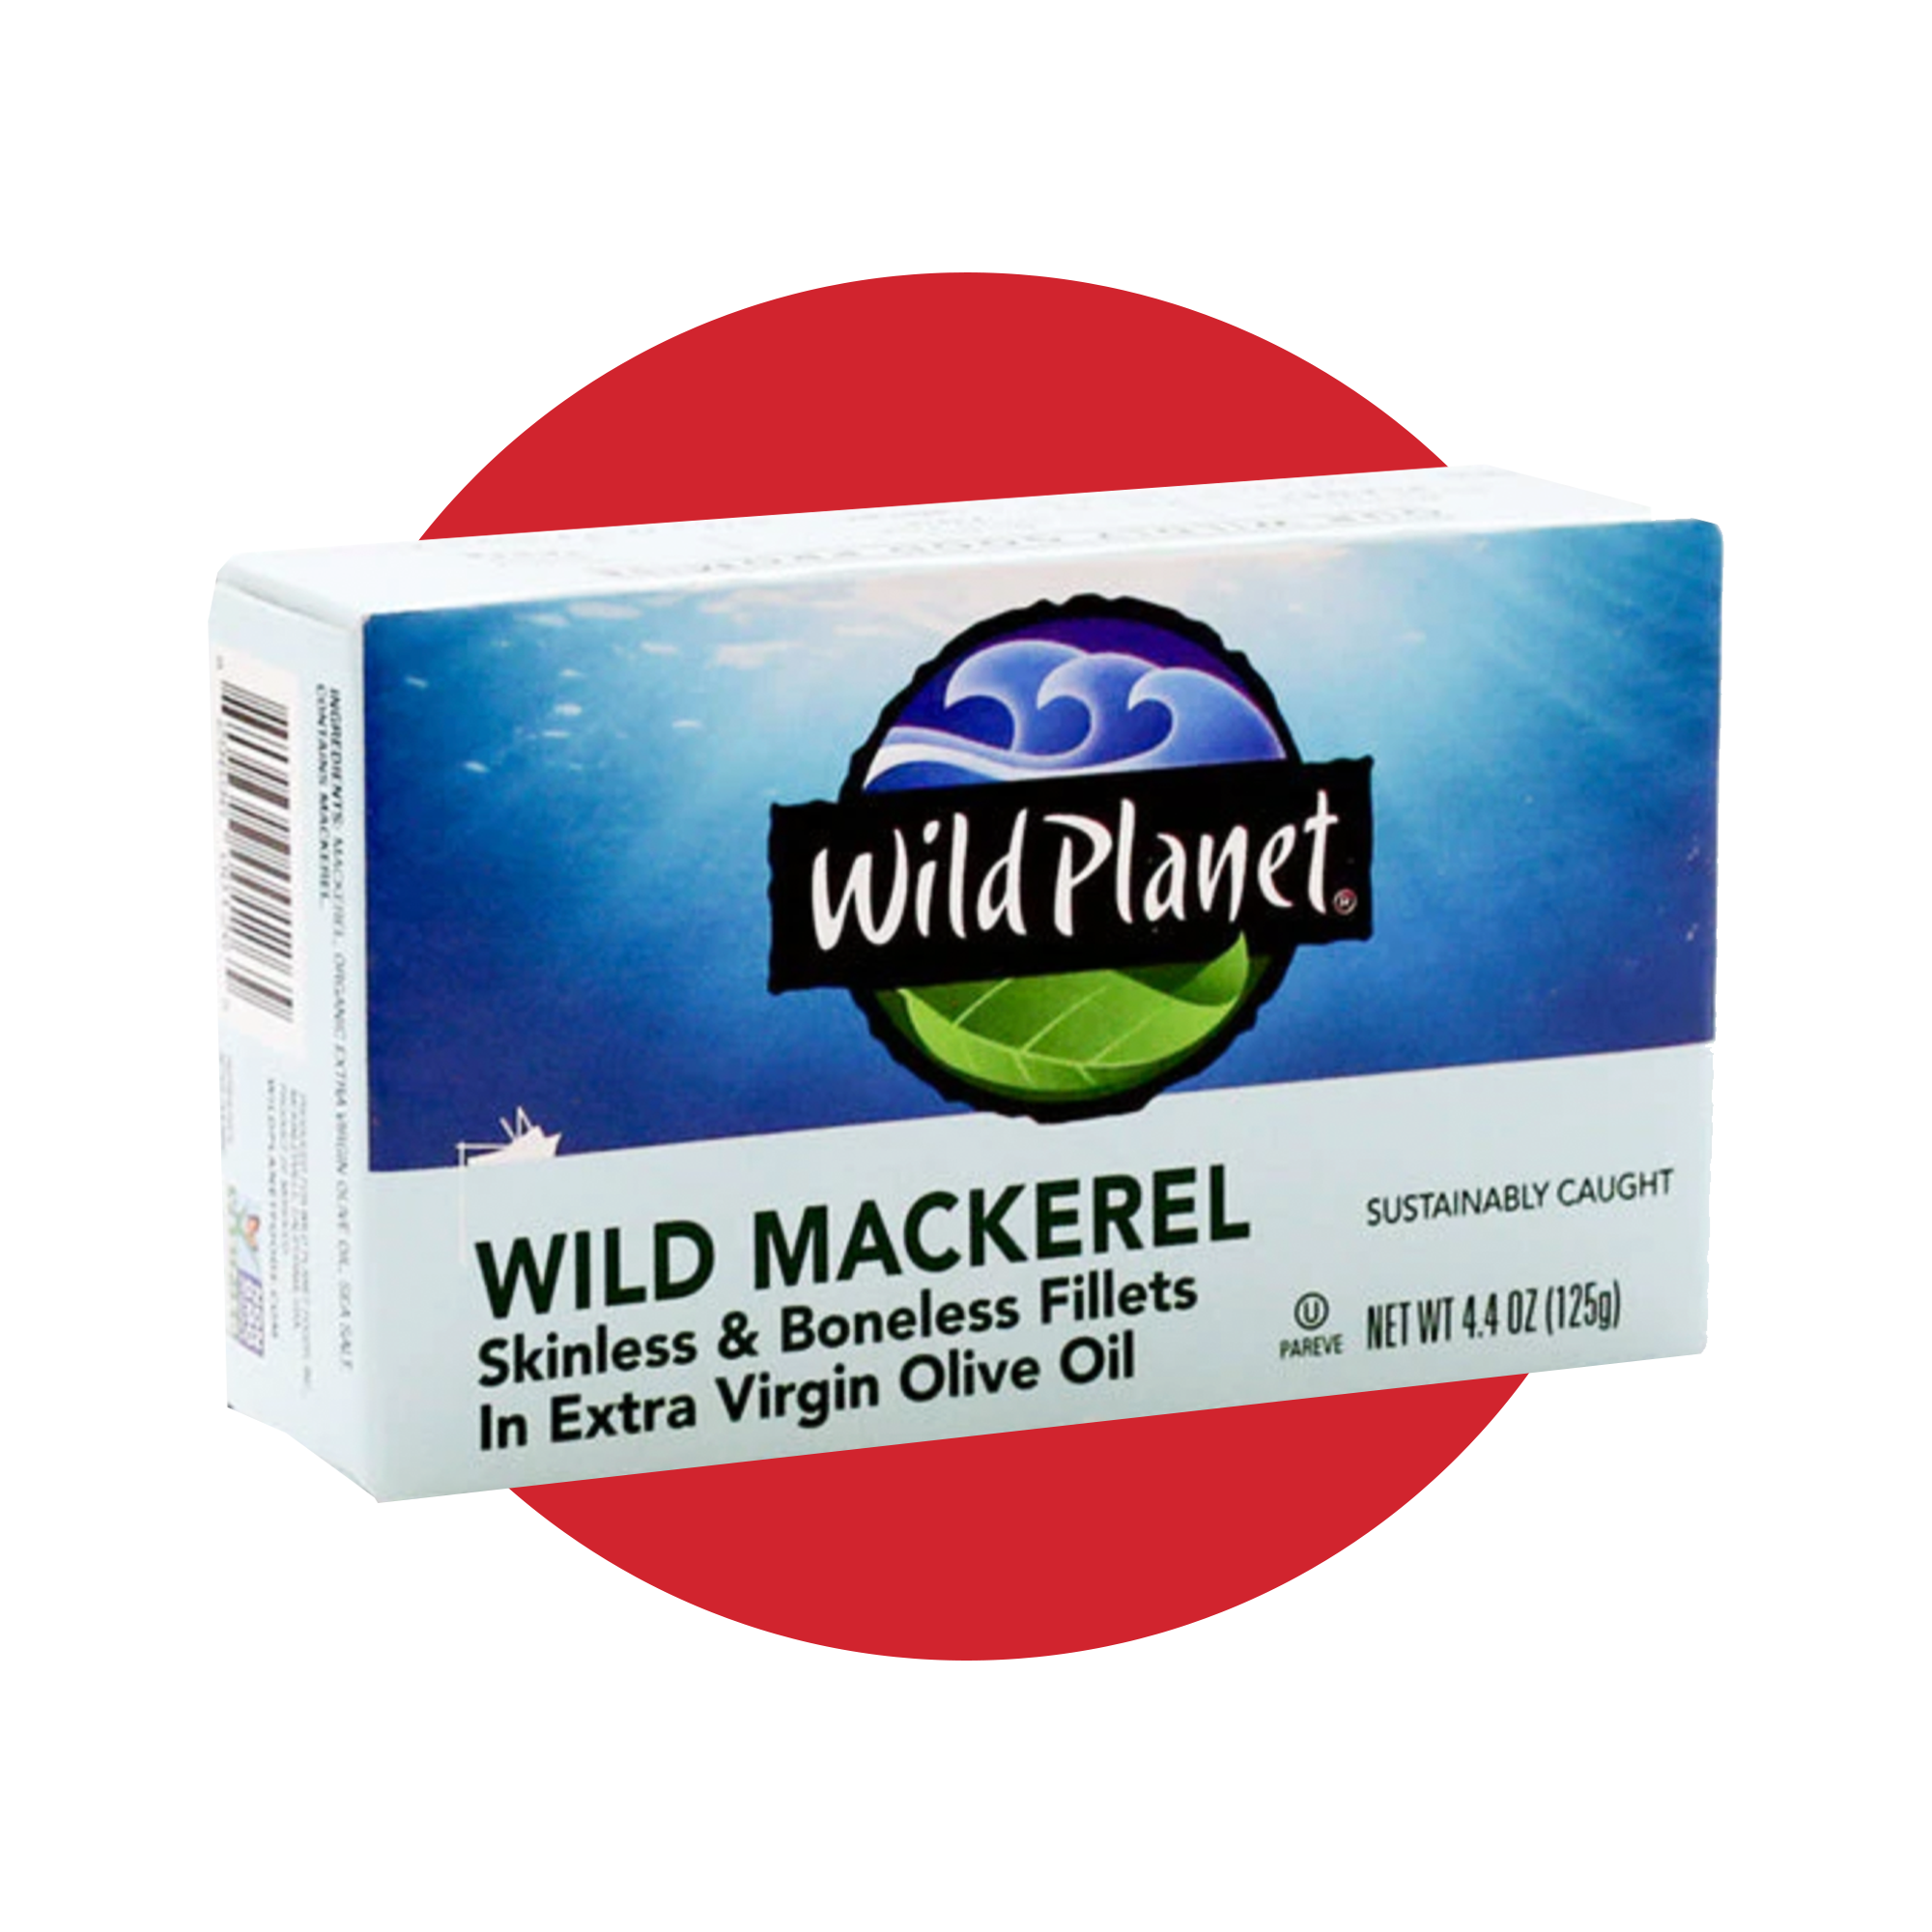 Wild Planet Wild Mackerel Fillets